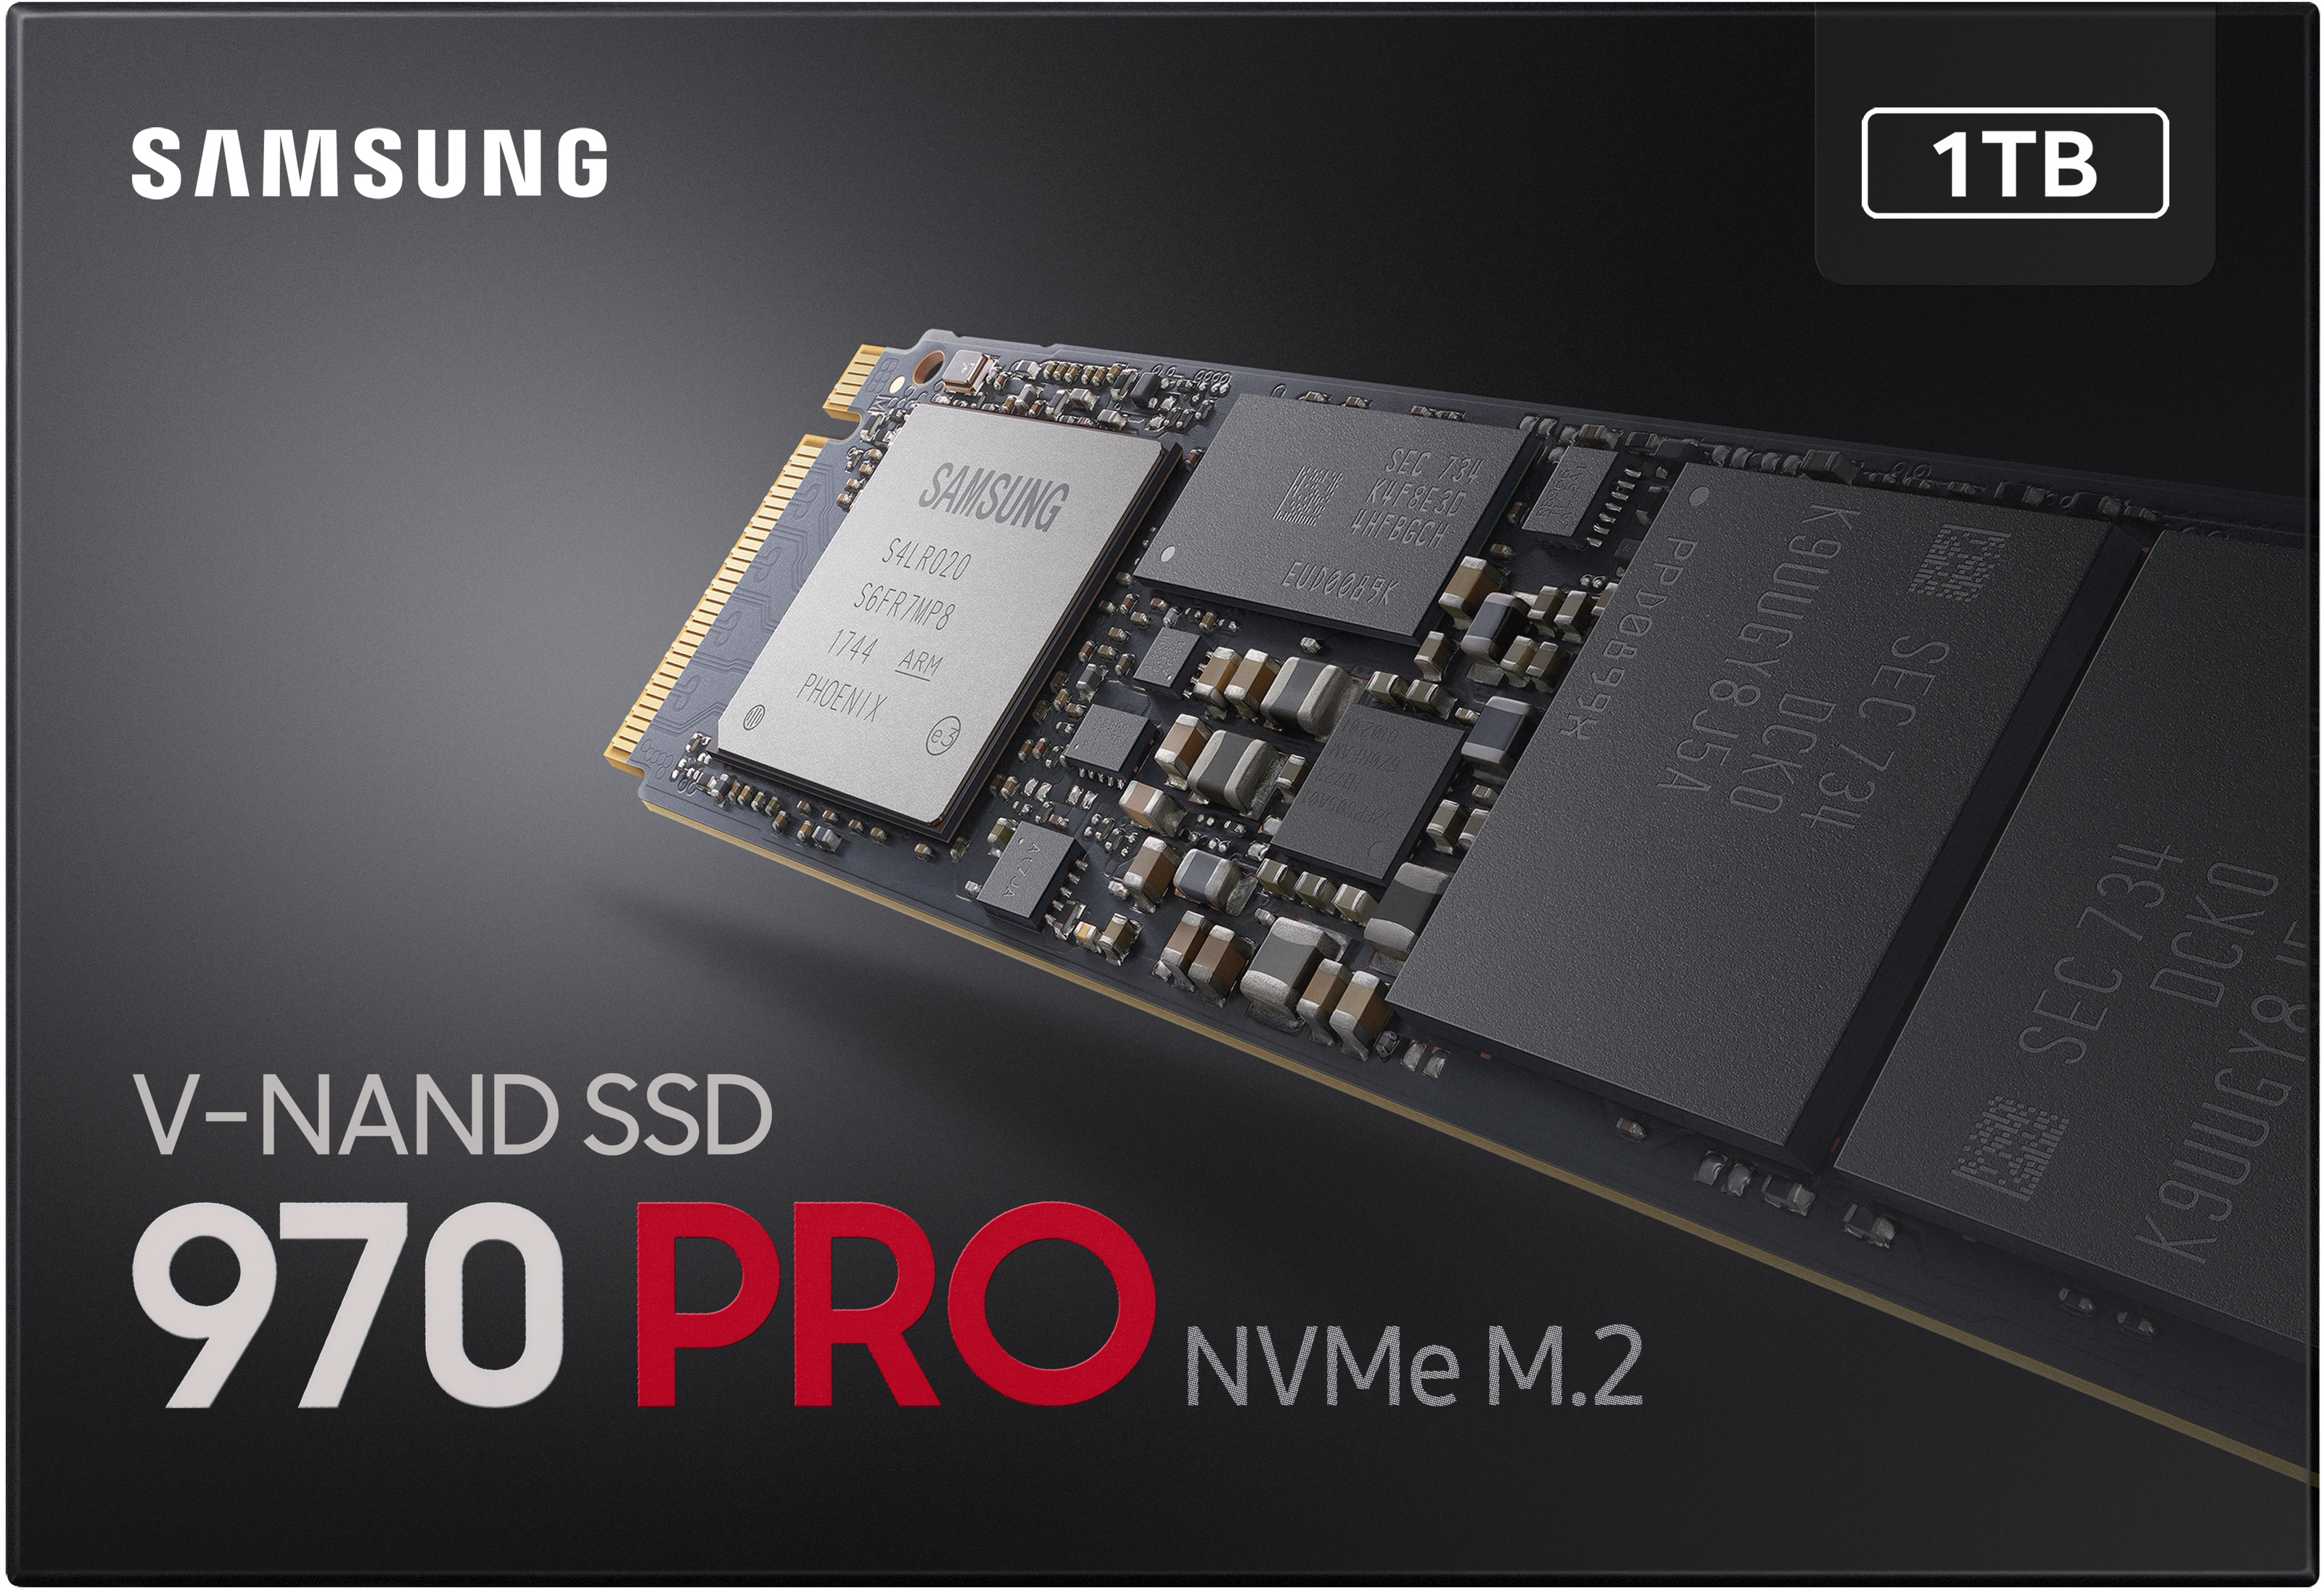 1 970 Pro Festplatte Retail, intern via SSD M.2 TB NVMe, SAMSUNG